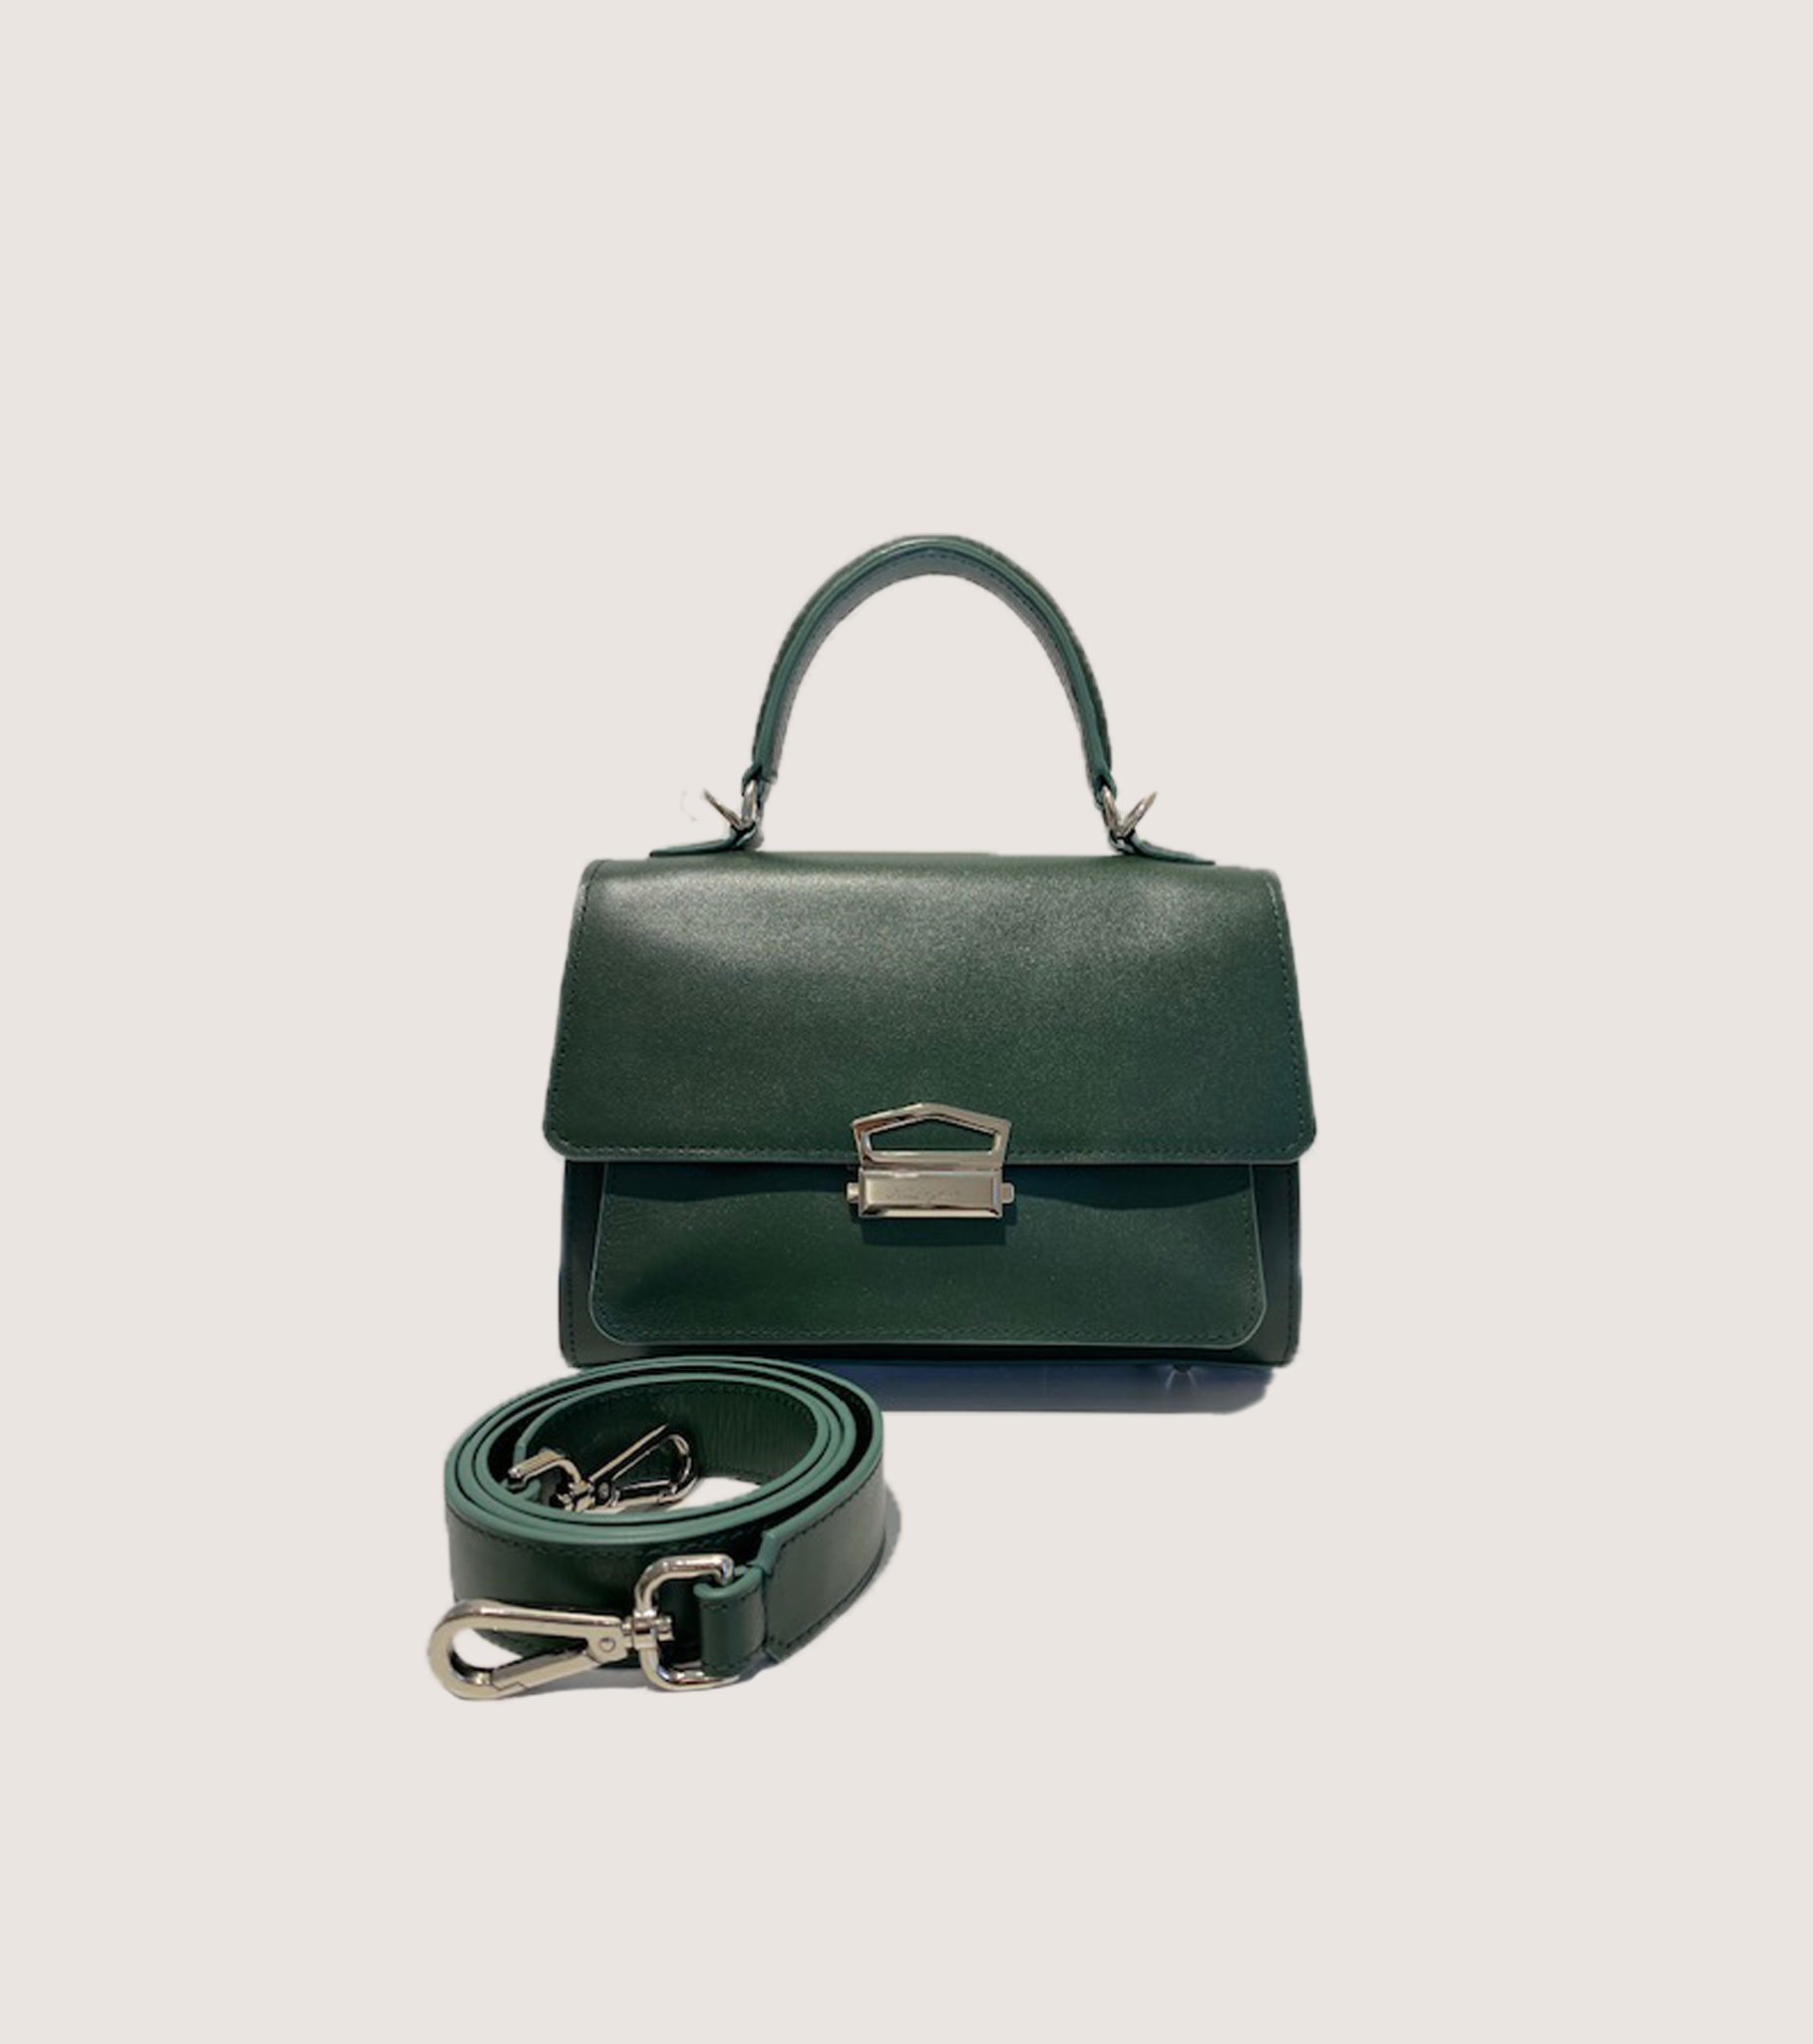 Nelda Handbag in Green - Northfleet Inc. Fashion Accessories & Bags